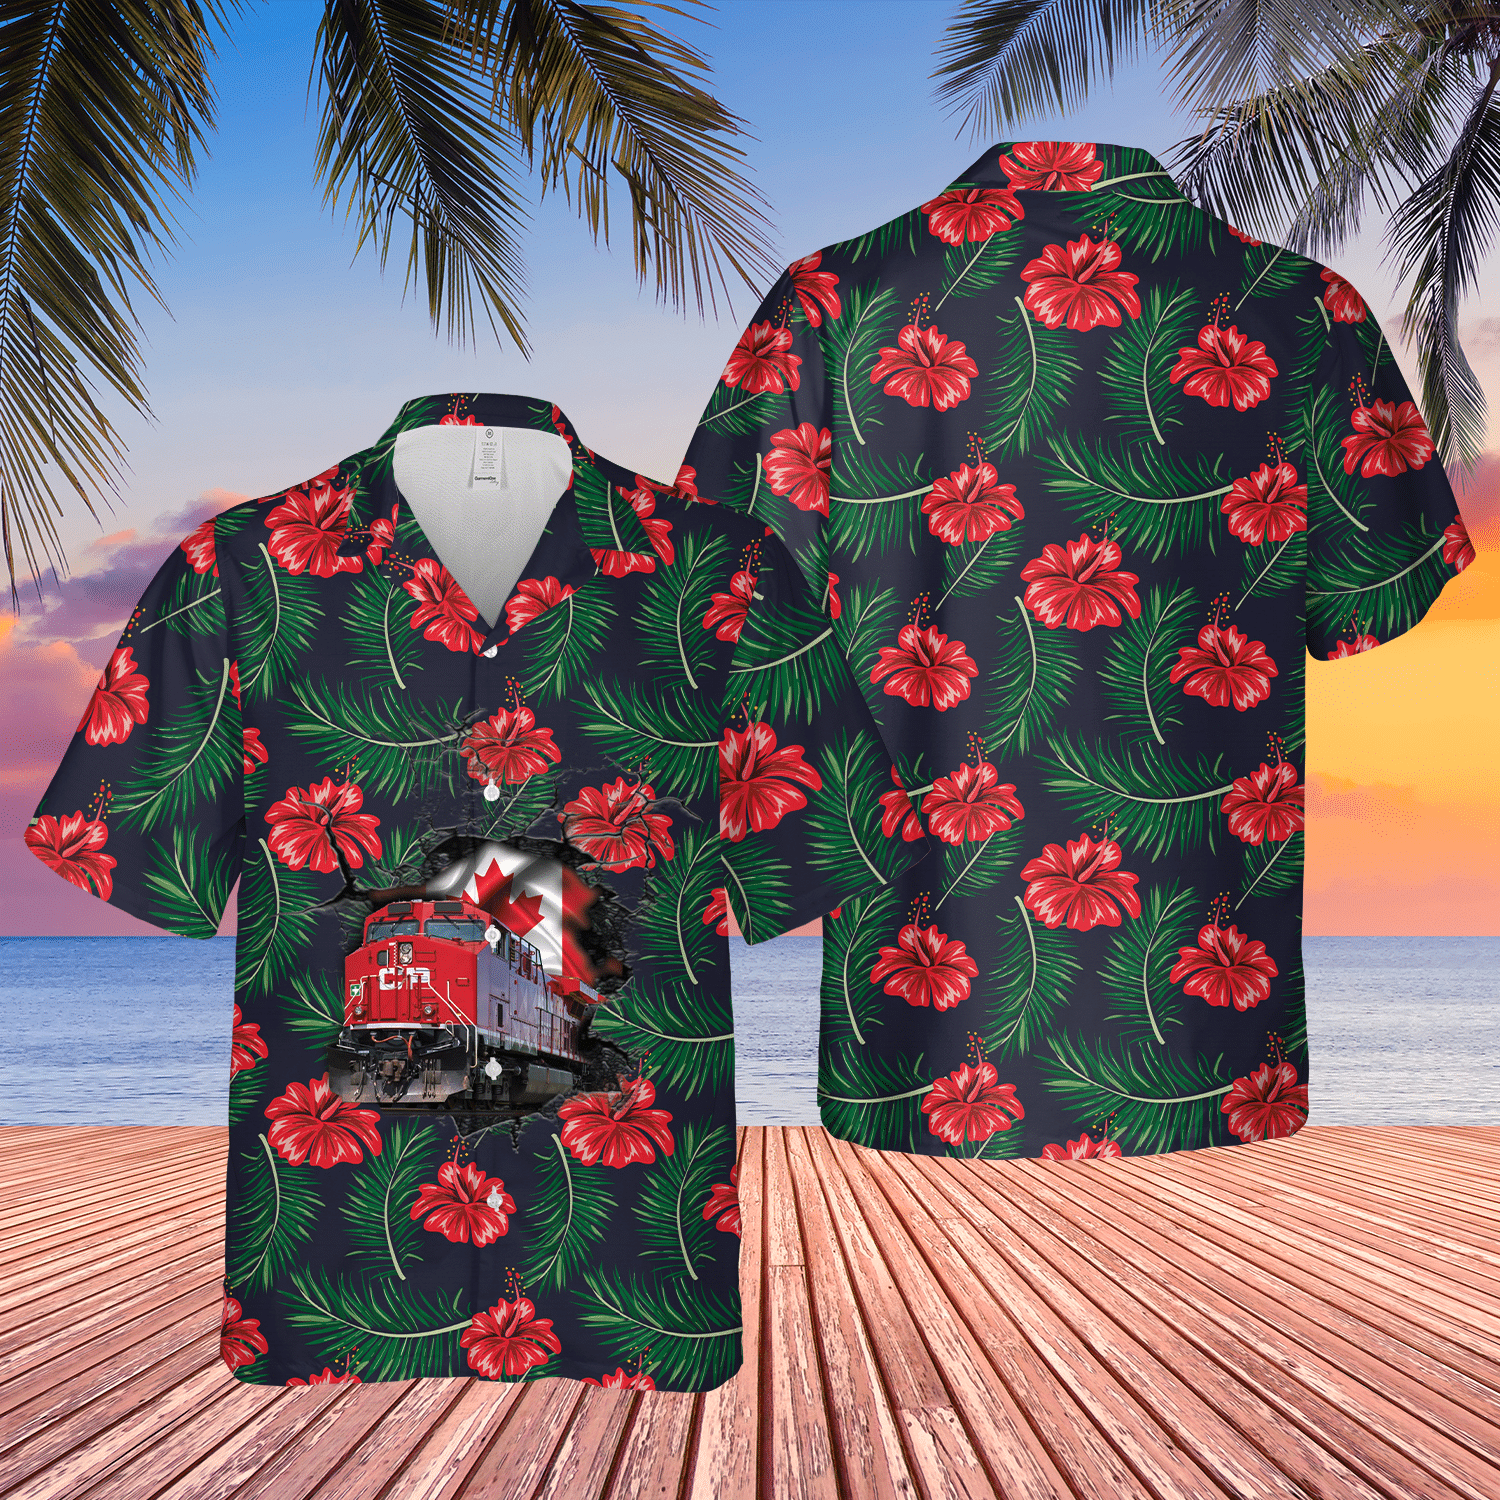 Enjoy your summer with top cool hawaiian shirt below 85